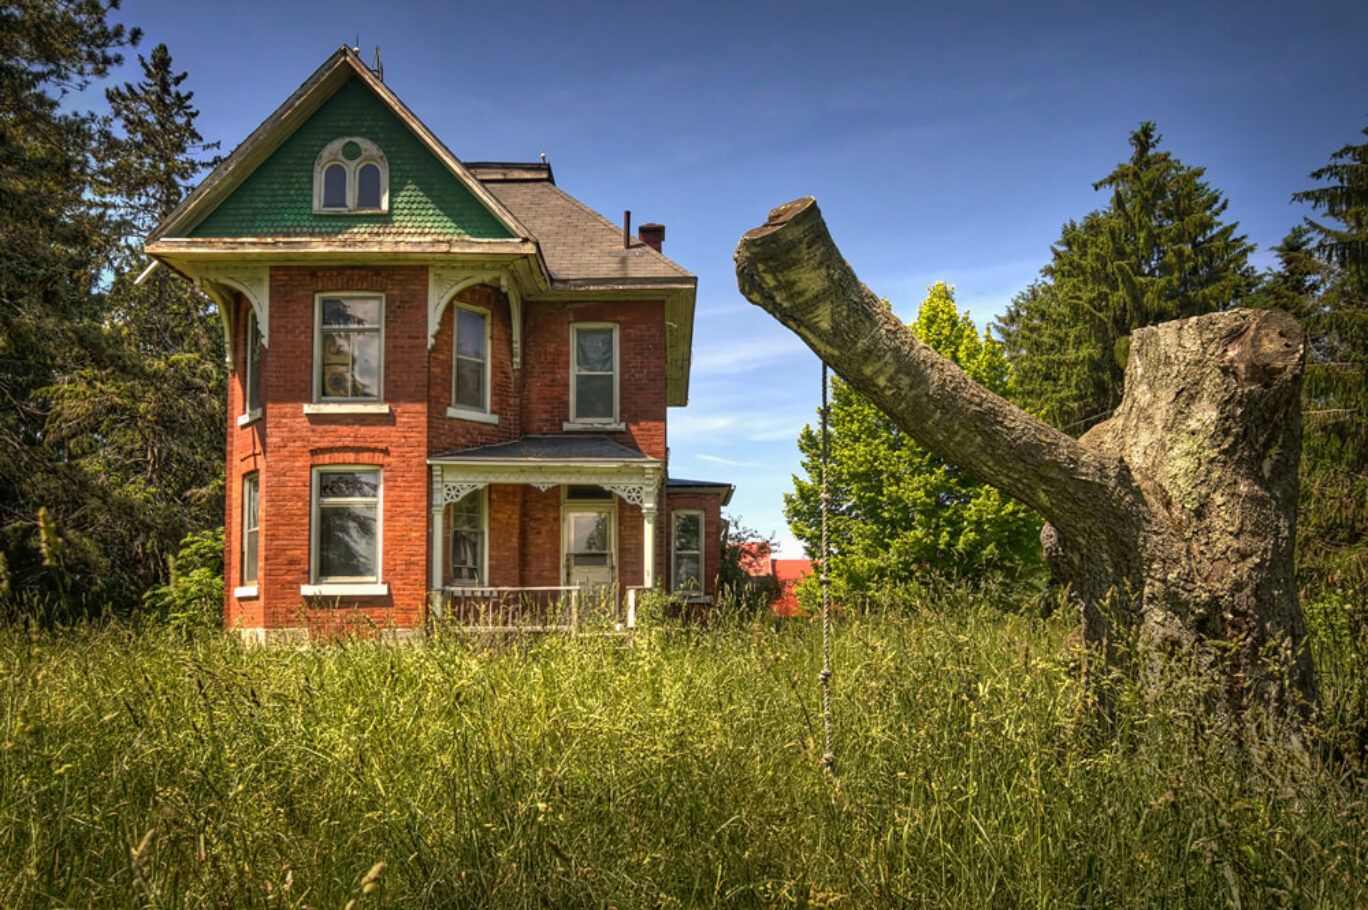 Abandoned farmhouse in Ontario, Canada - Left Ahead Photography